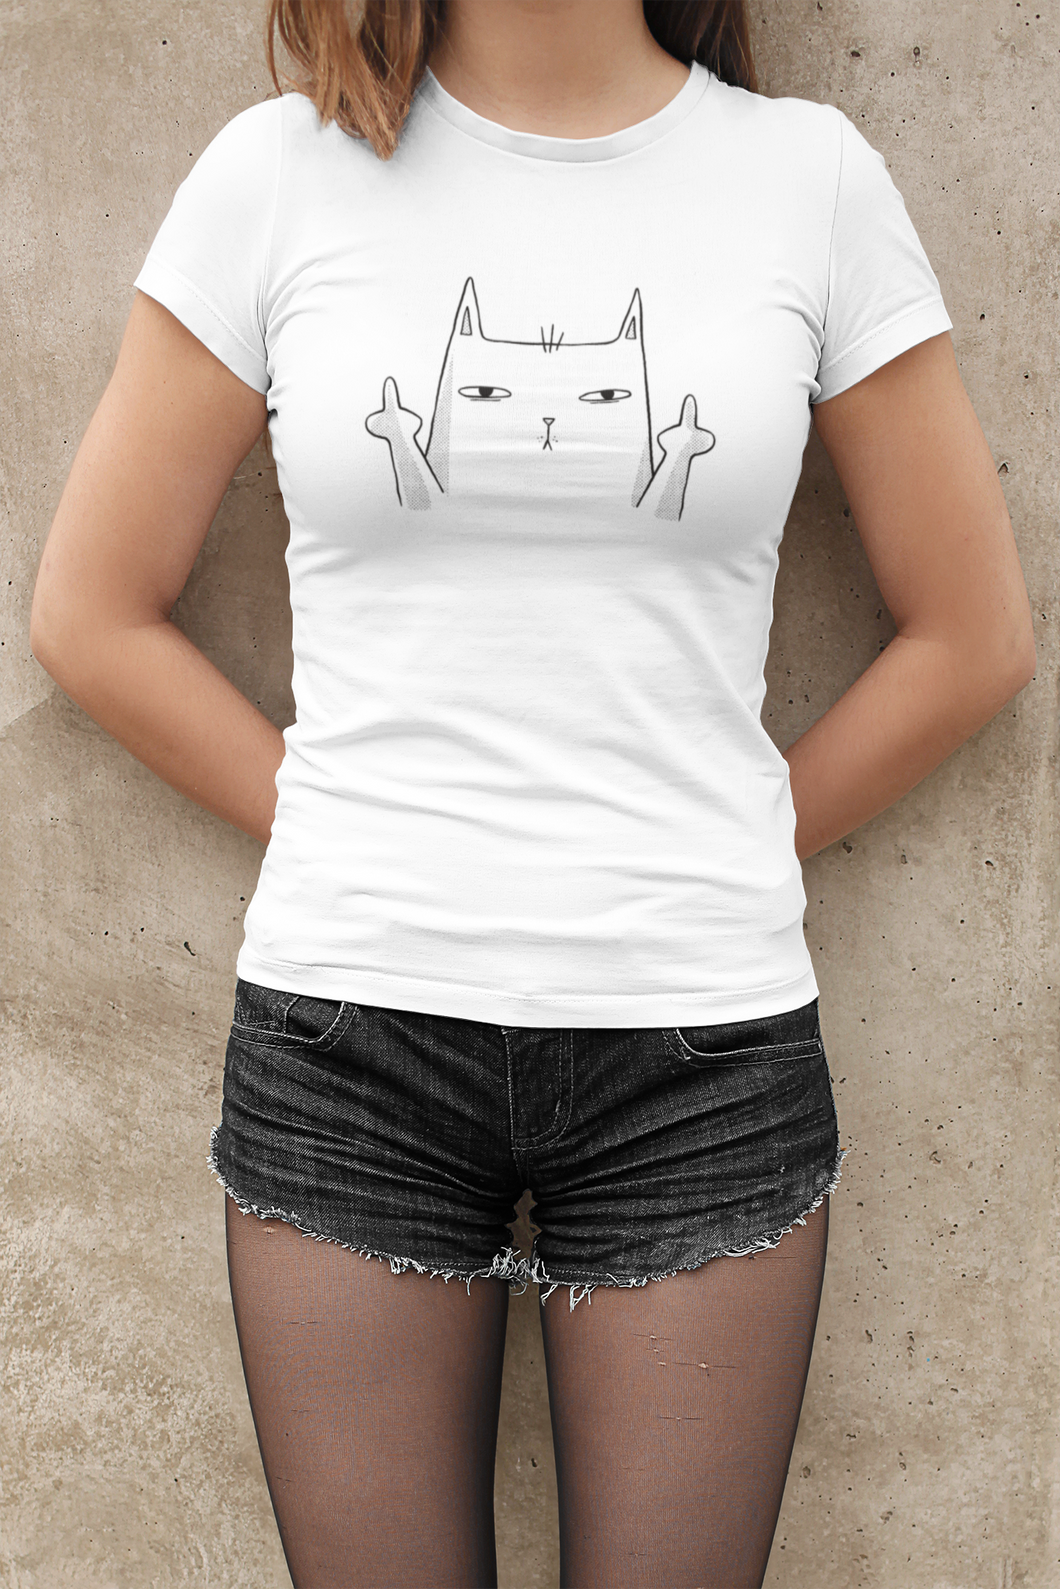 Damen  T-Shirt - Katze Stinkefinger- Rockabilly Rockn Roll Frau weiß kurzarm rundhals baumwolle italien Cat